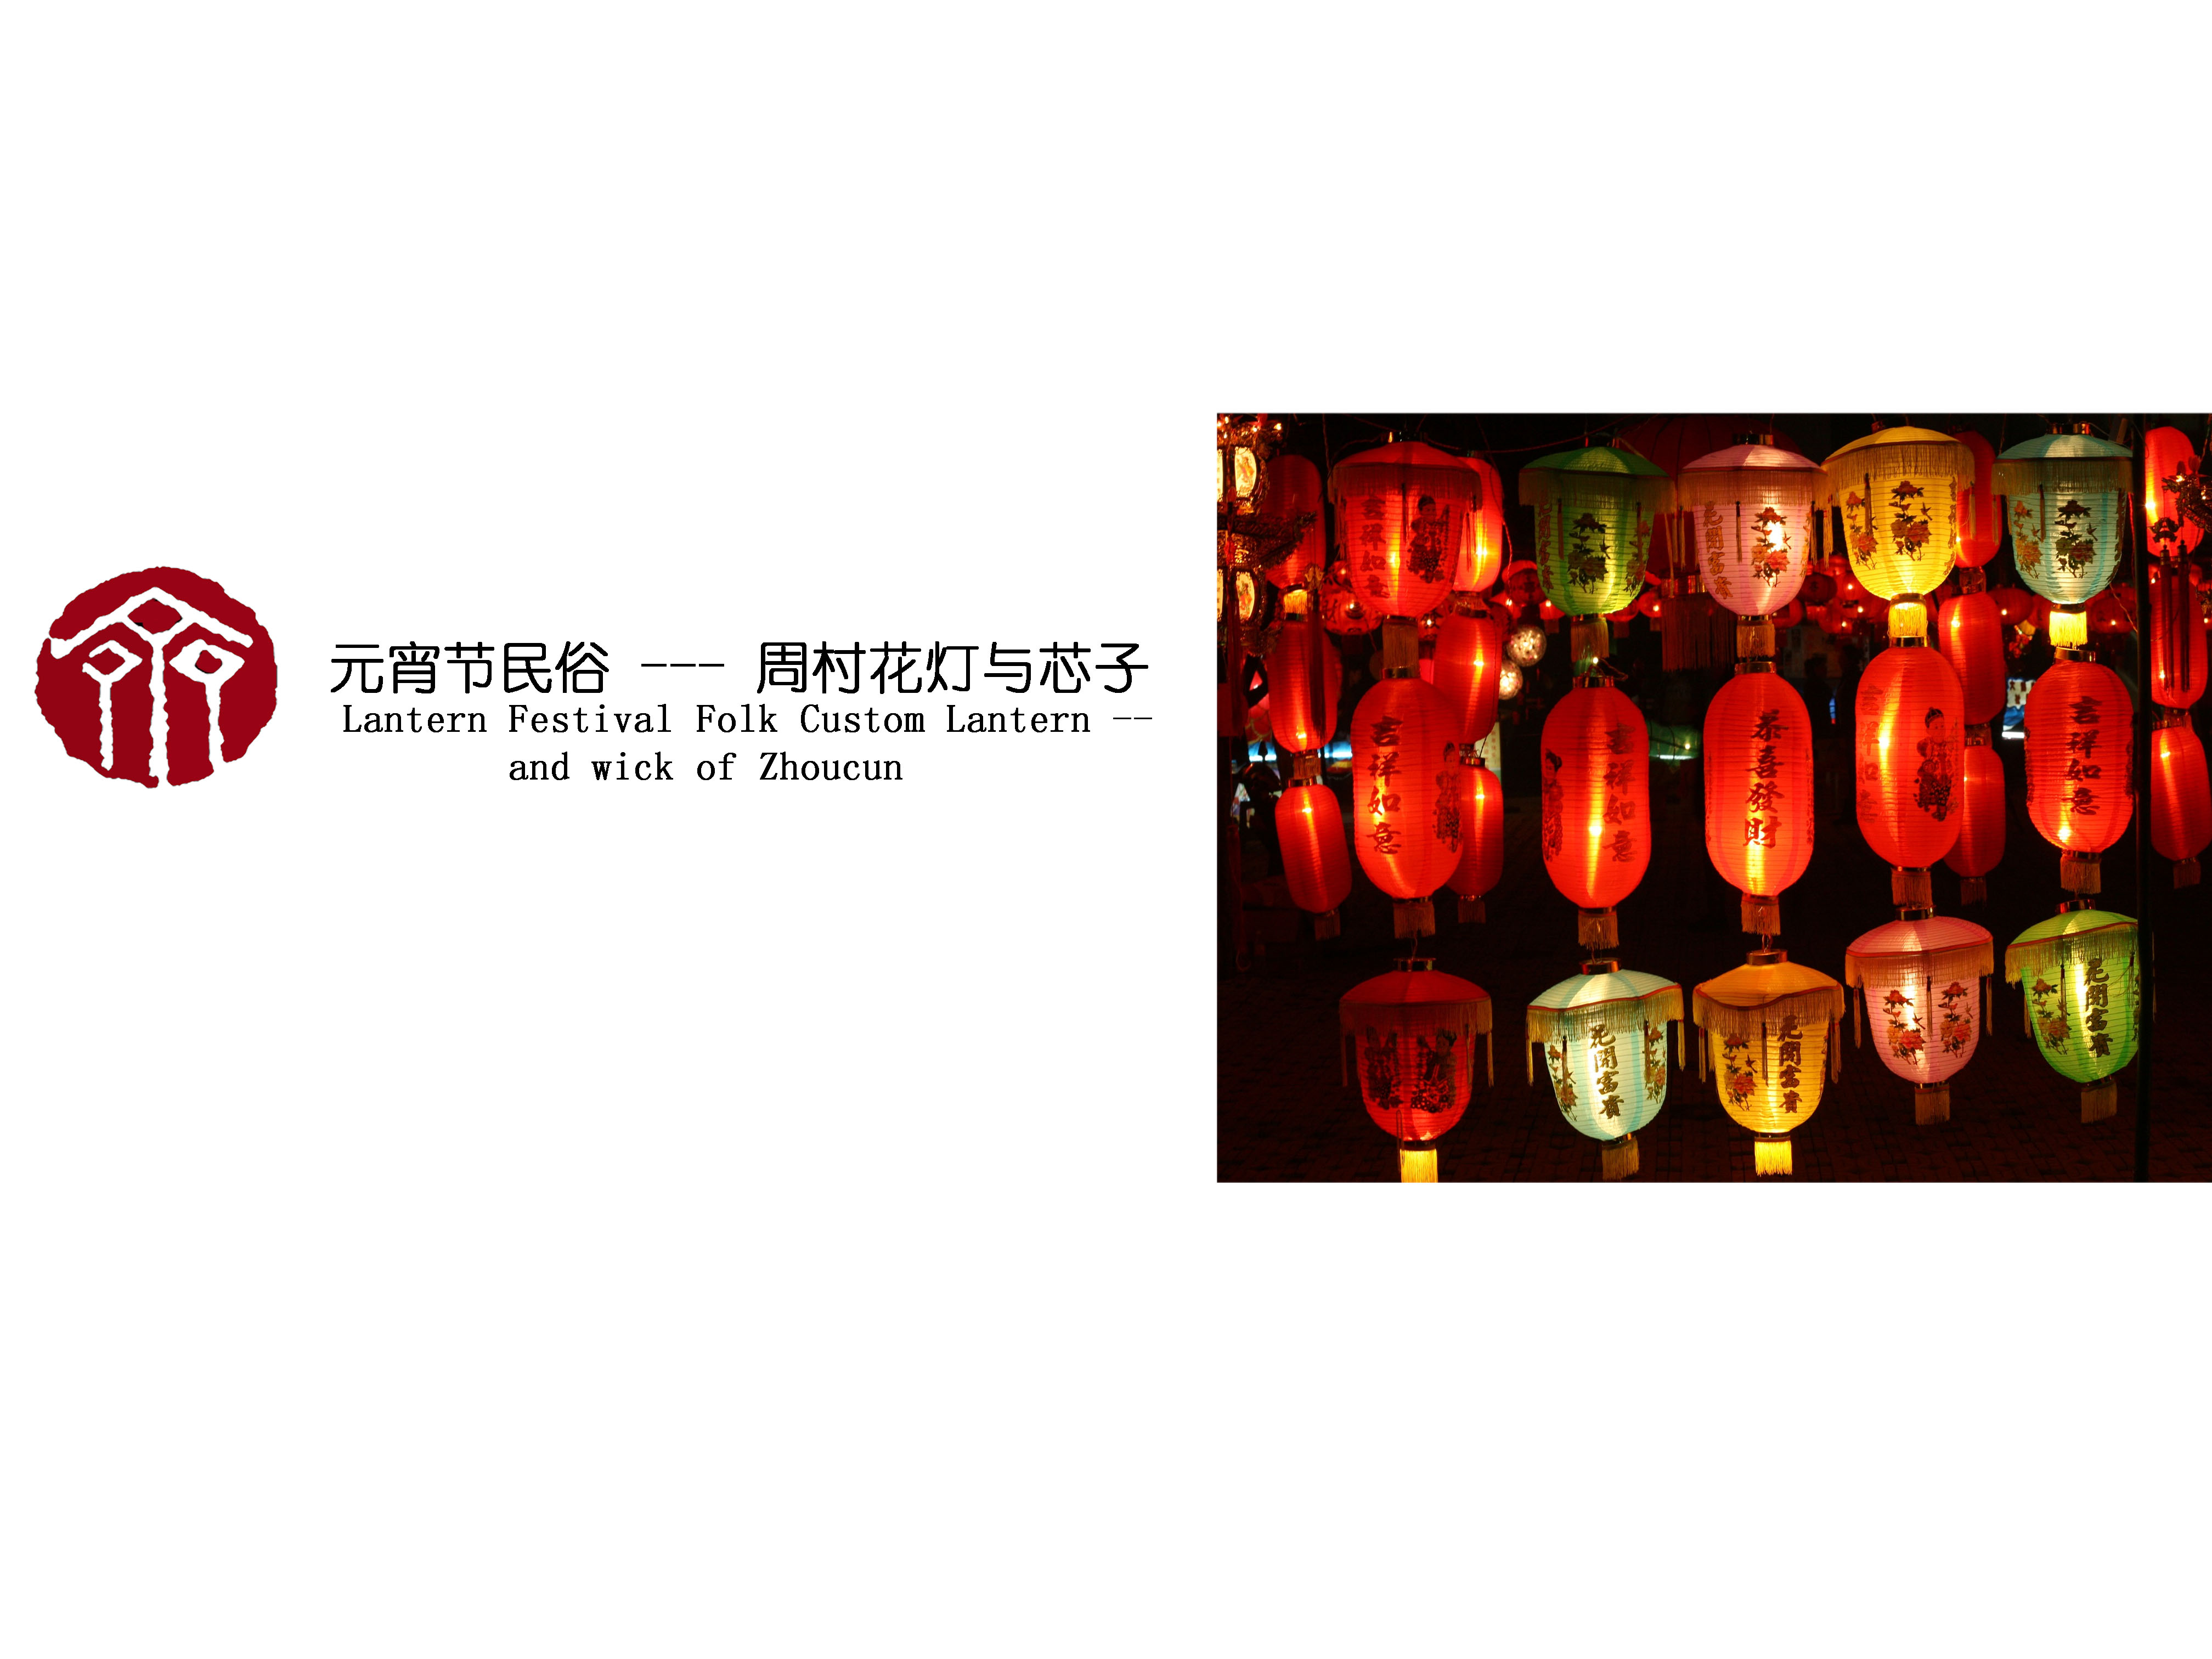 Lantern Festival Folk Custom - Lantern and wick of Zhoucun